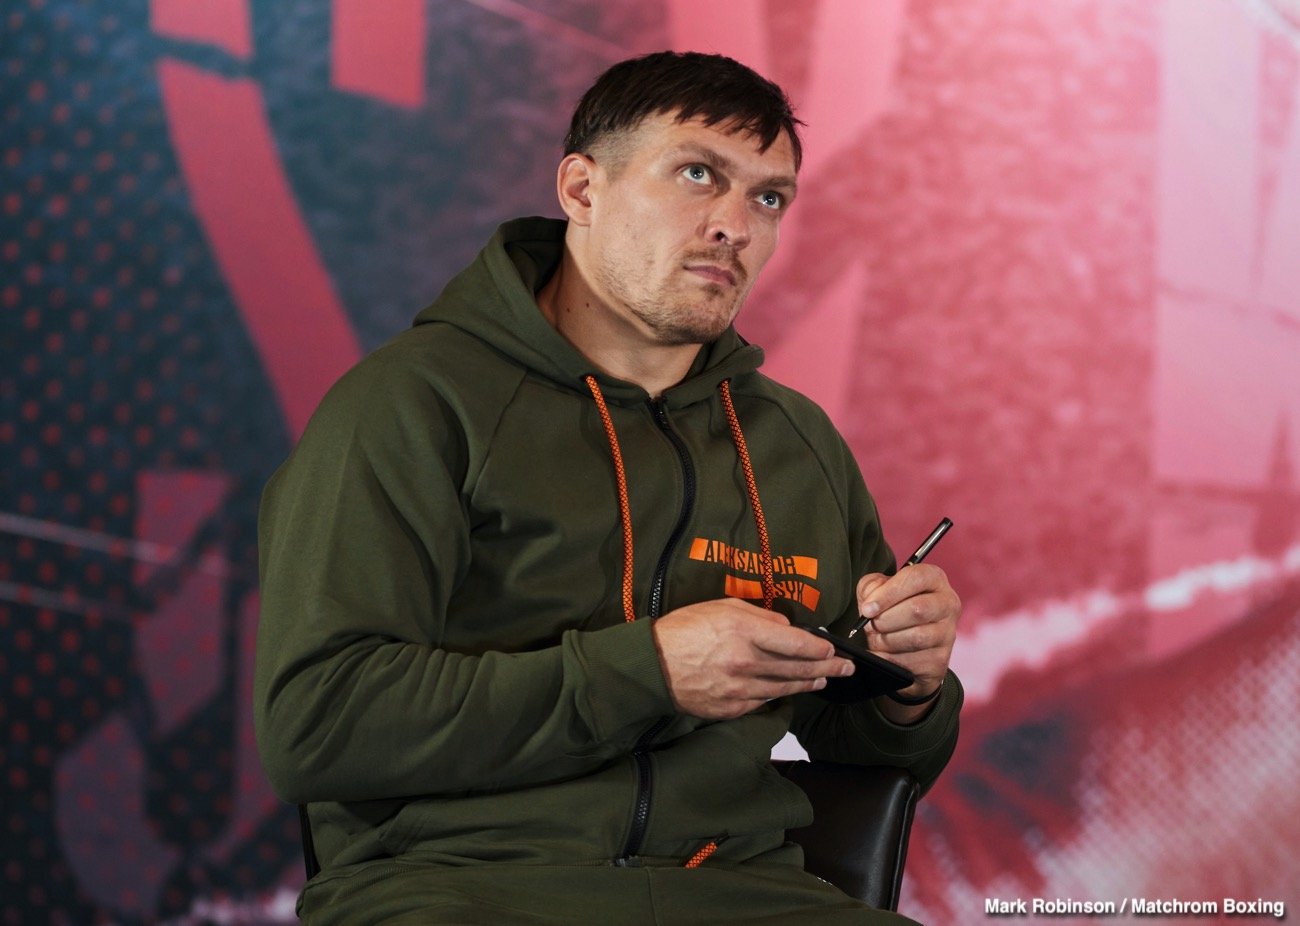 Alexander Usyk boxing image / photo